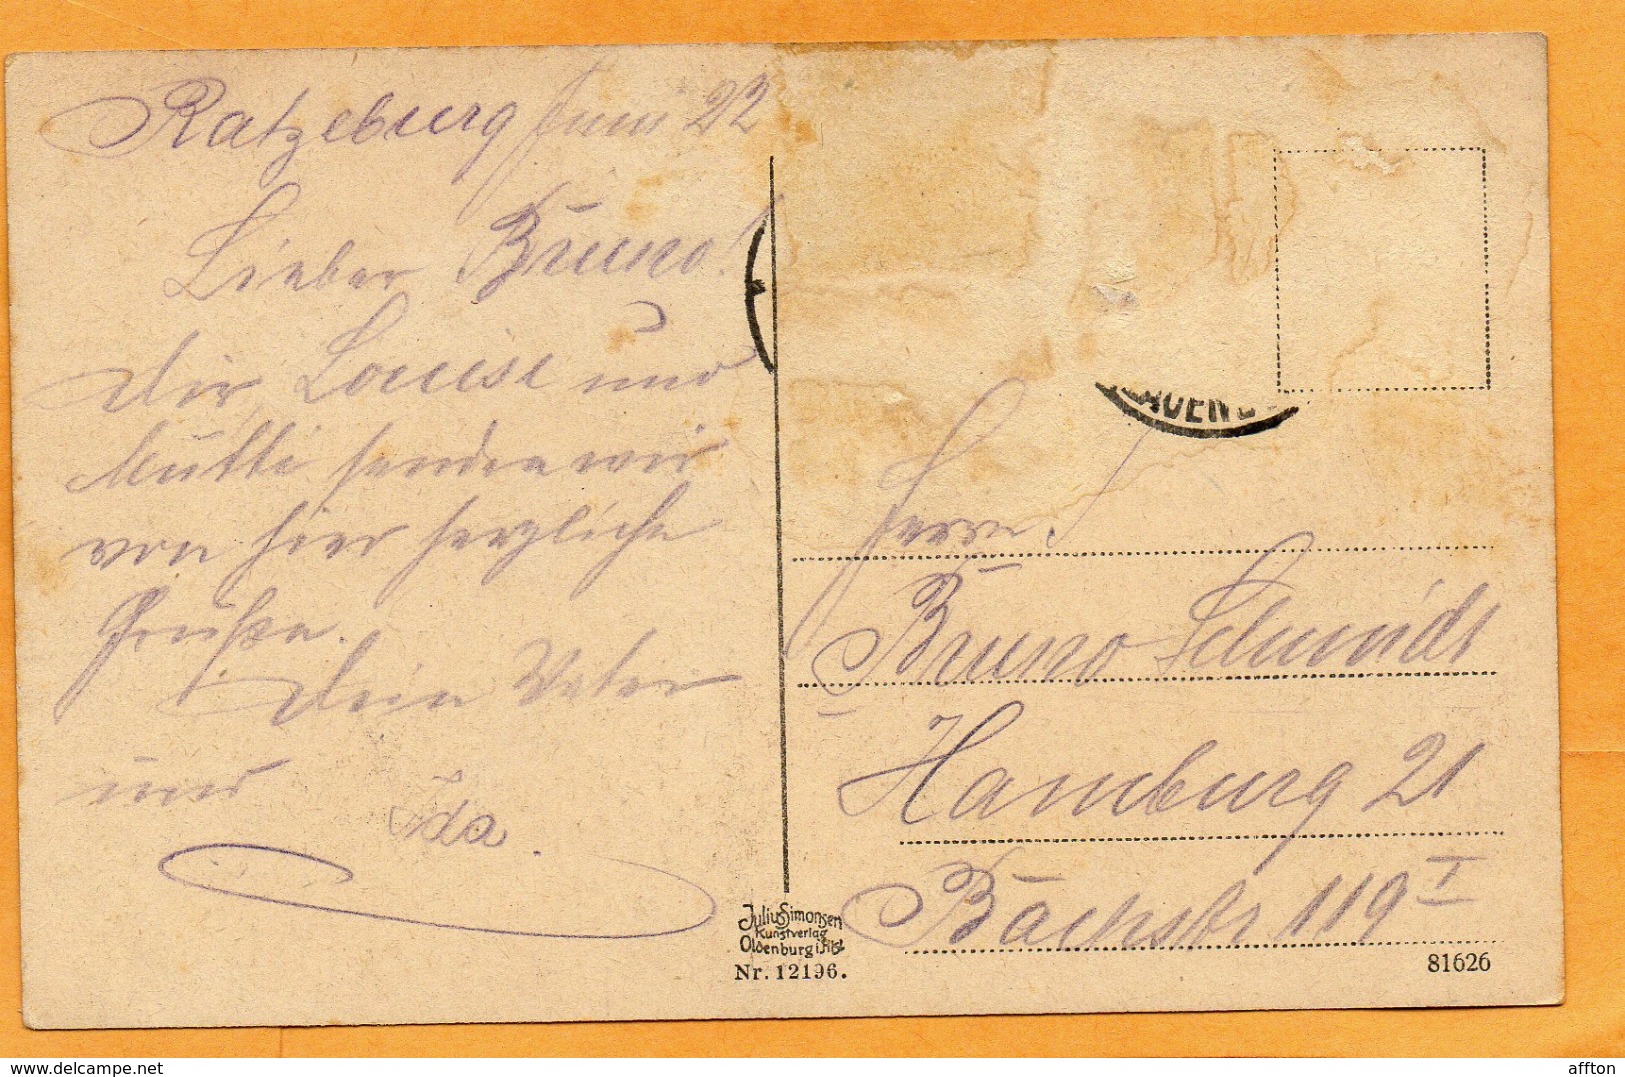 Ratzeburg 1922 Postcard - Ratzeburg